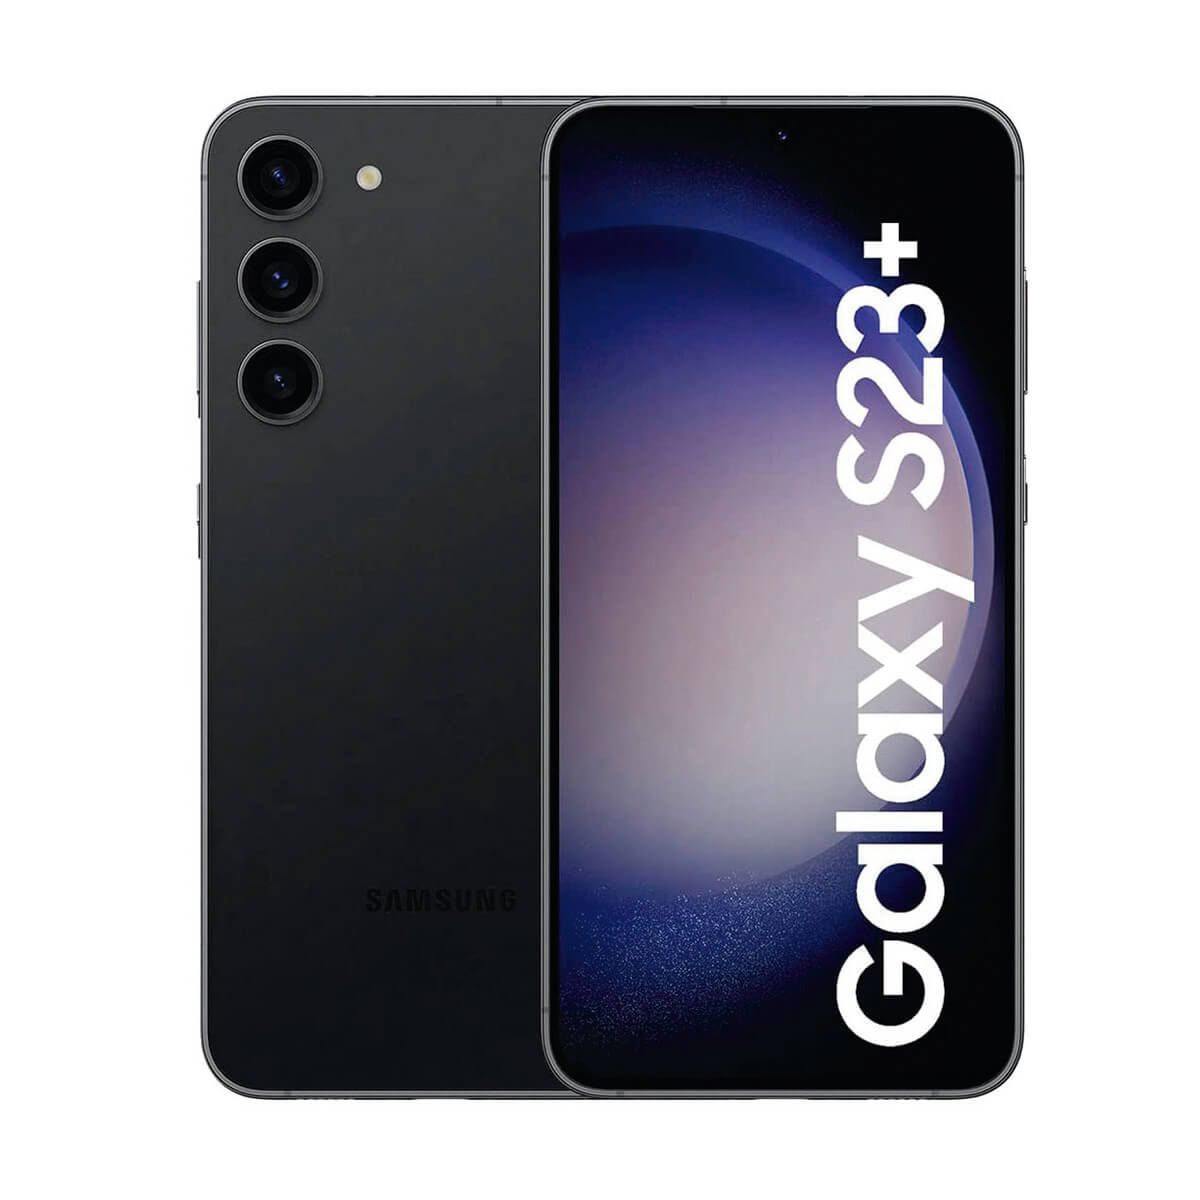 SAMSUNG Galaxy S23 5G 256GB (Dual SIM)